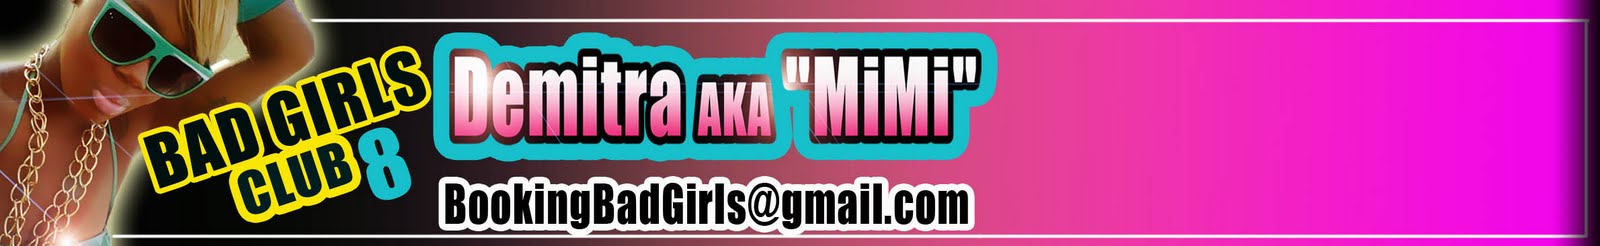 Mimi Bad girls club